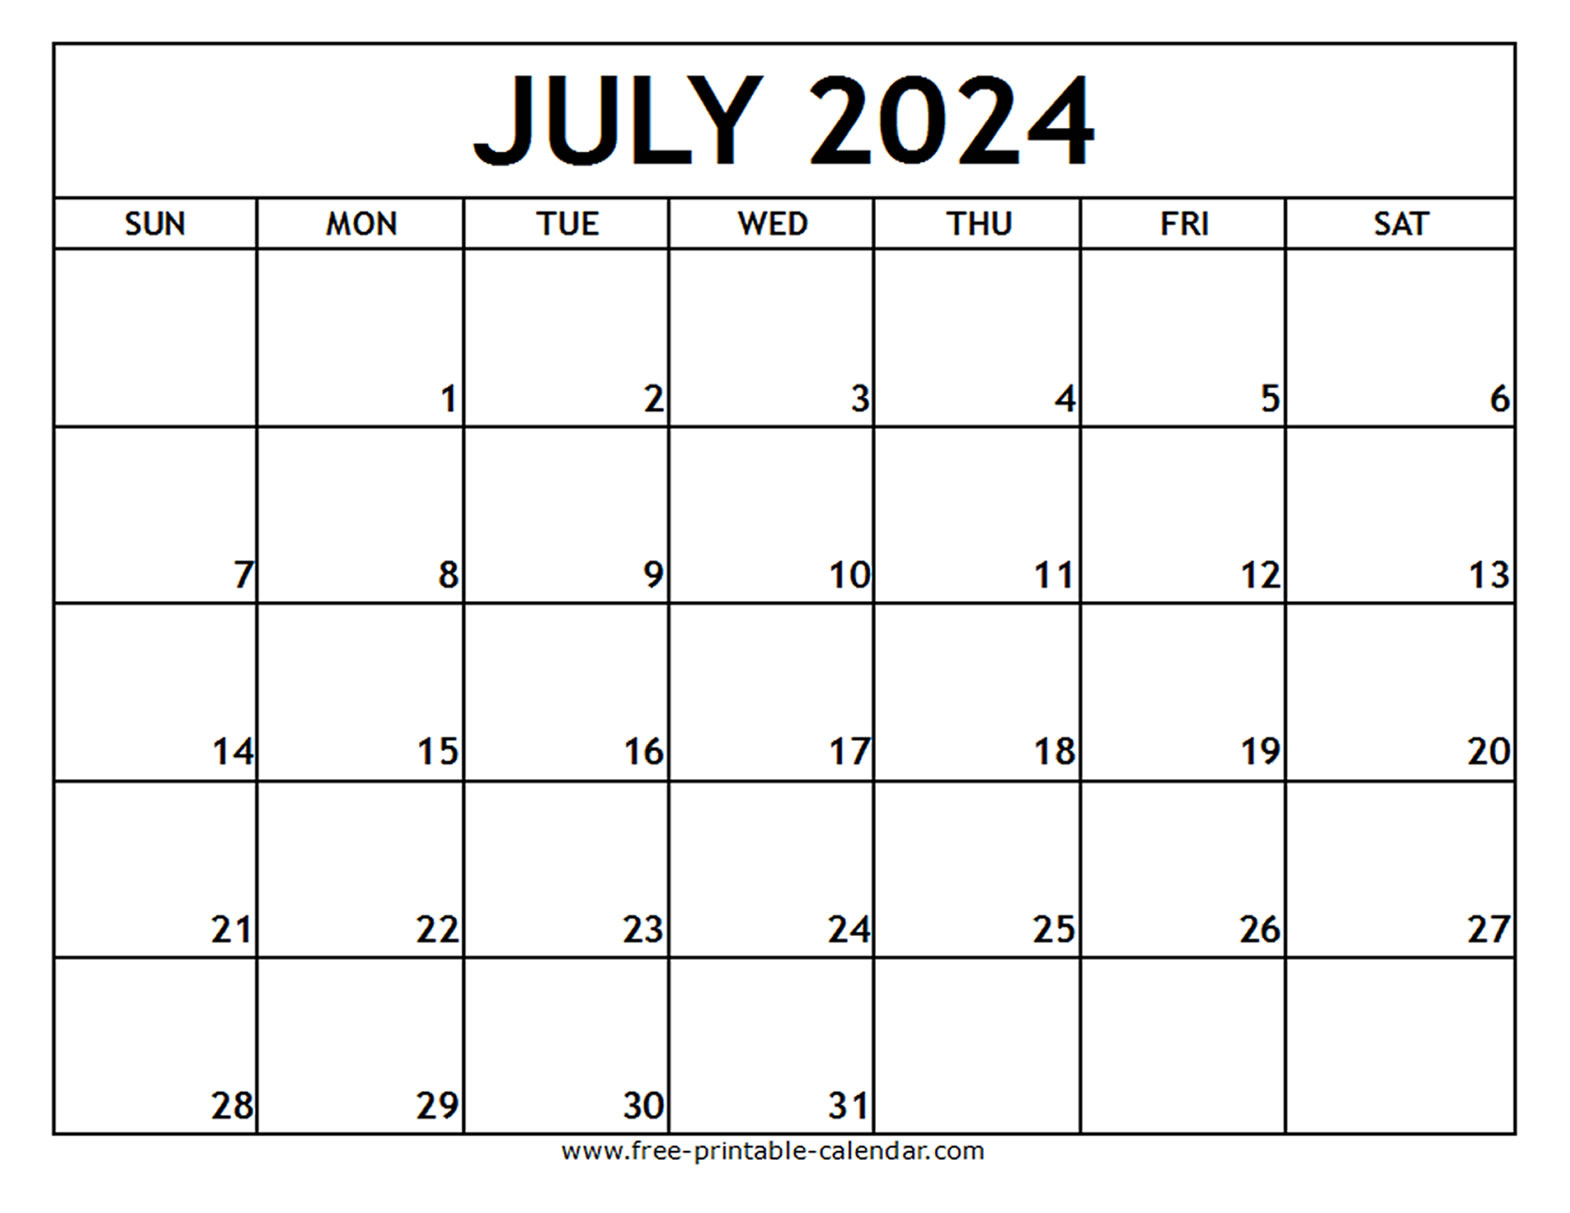 July 2024 Printable Calendar - Free-Printable-Calendar | 2024 July Calendar Template